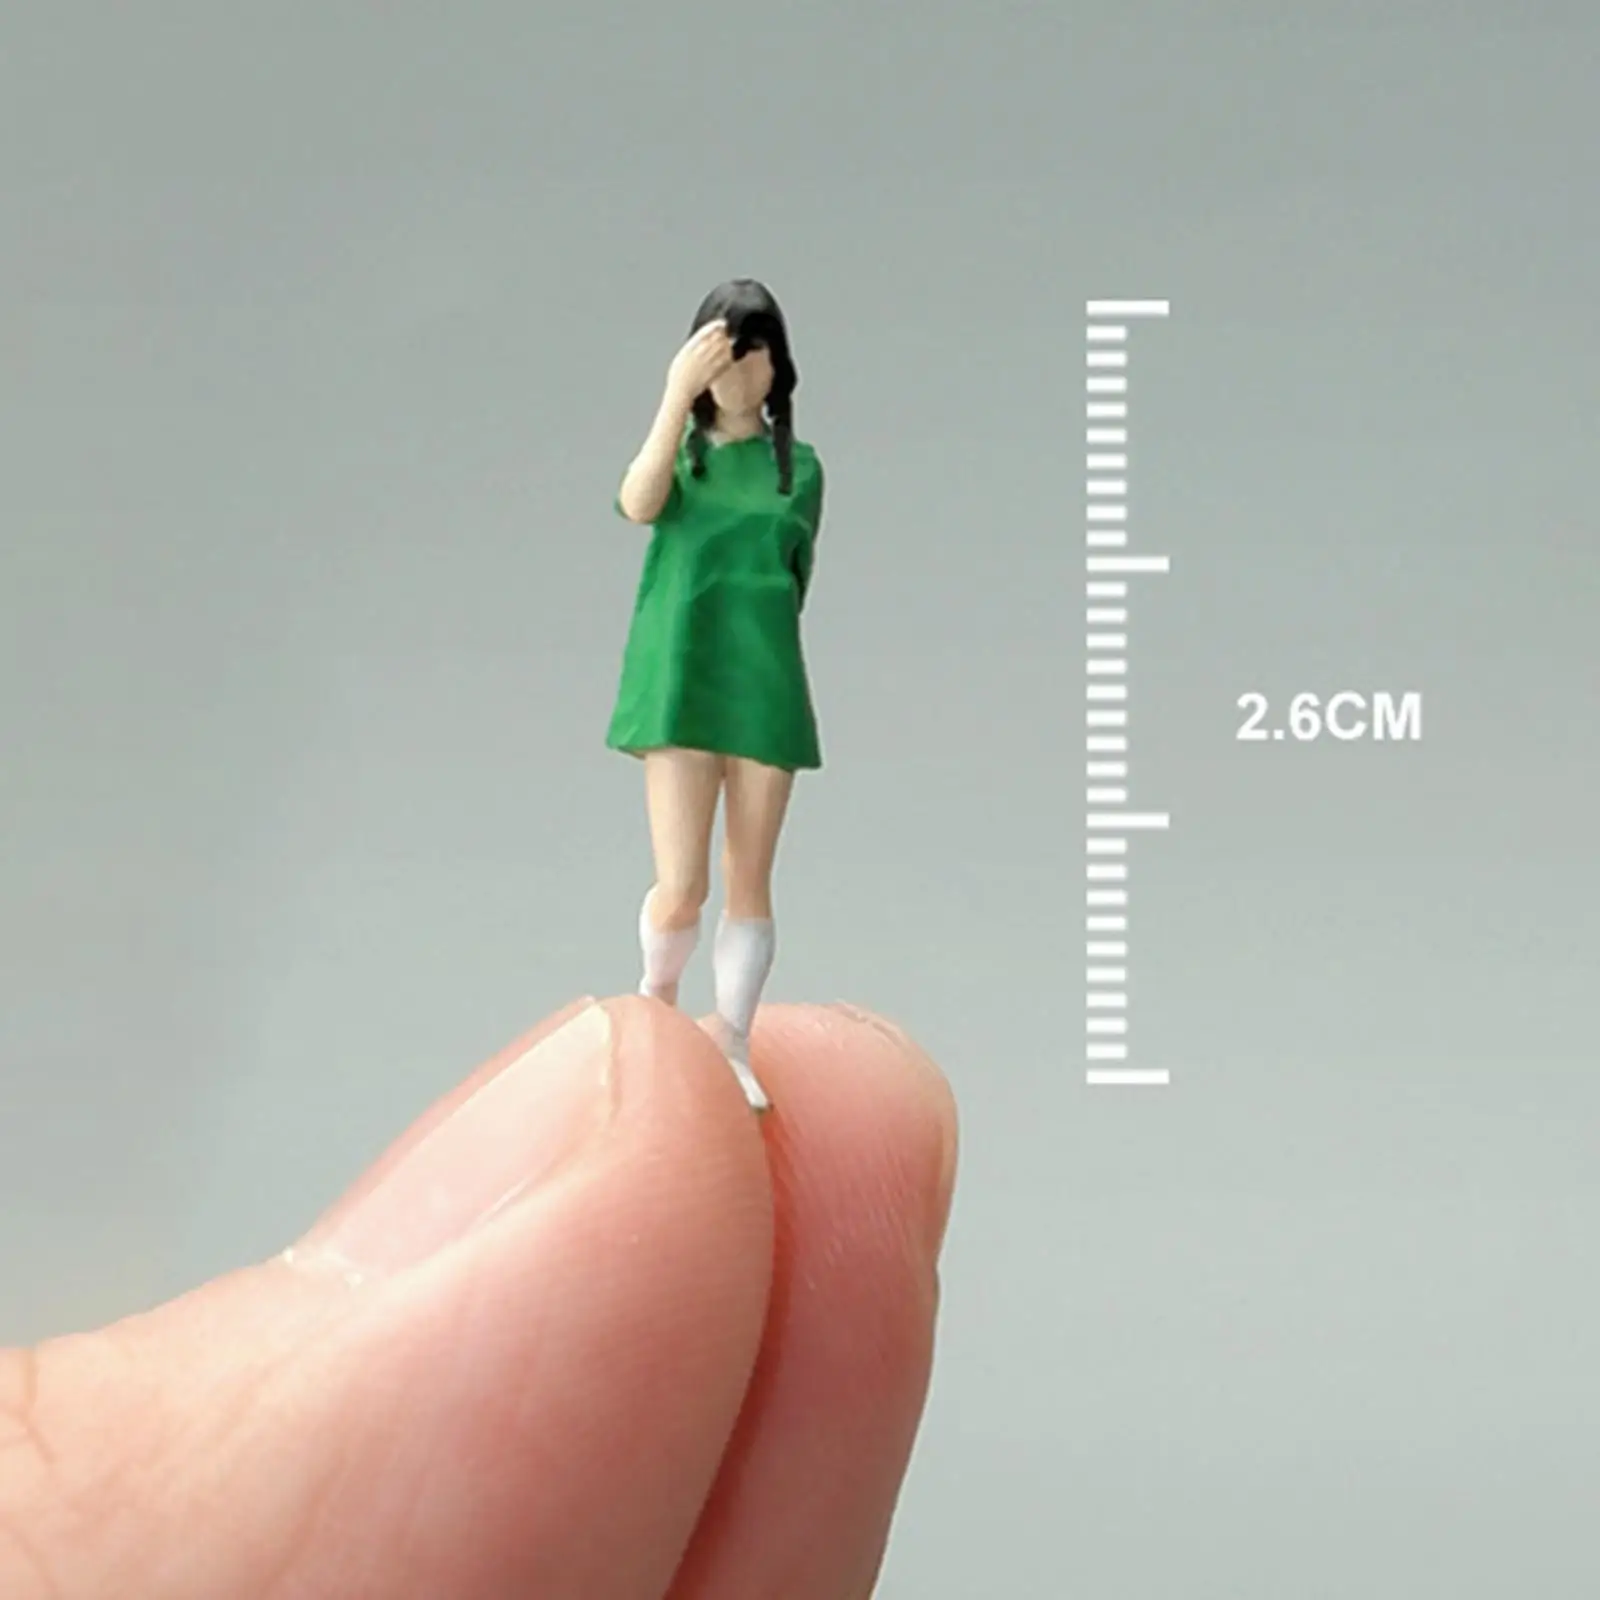 1/64 Diorama Figure Miniature Layout for Collections Fariy Garden Dollhouse Accessories Desktop Ornament Model Building Kits